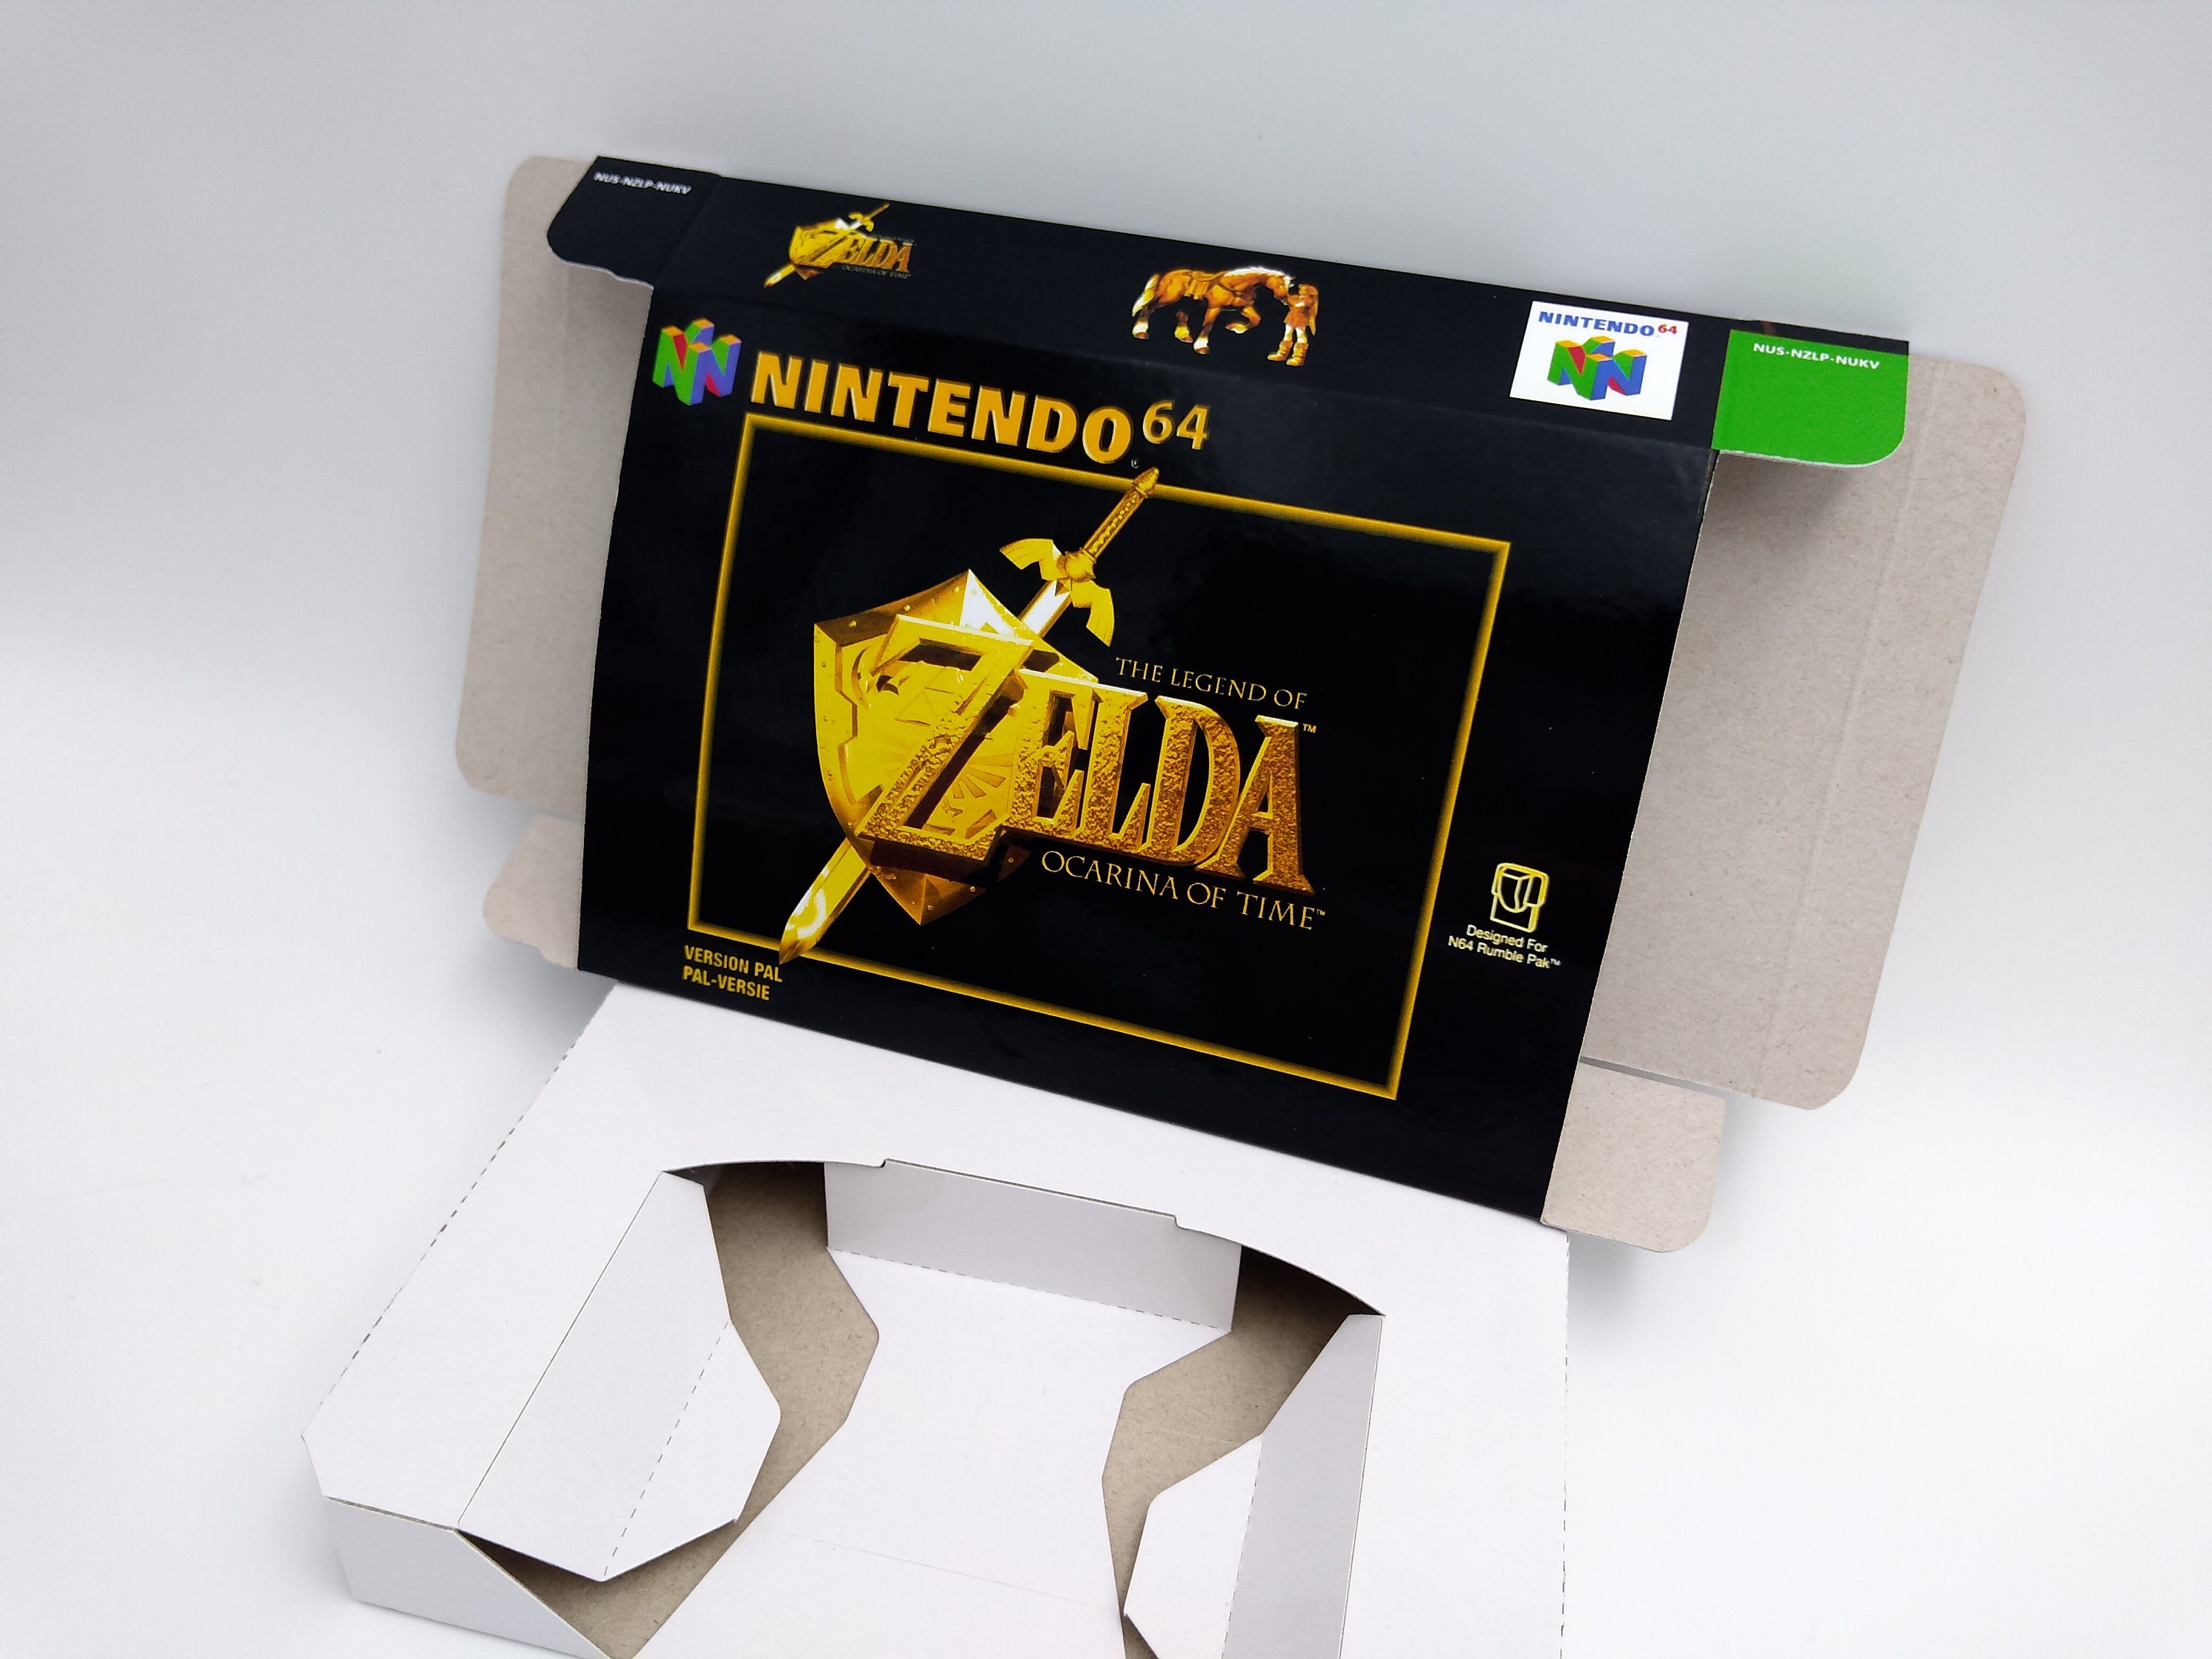 Zelda Ocarina Of Time Nintendo 64 N64 PAL 